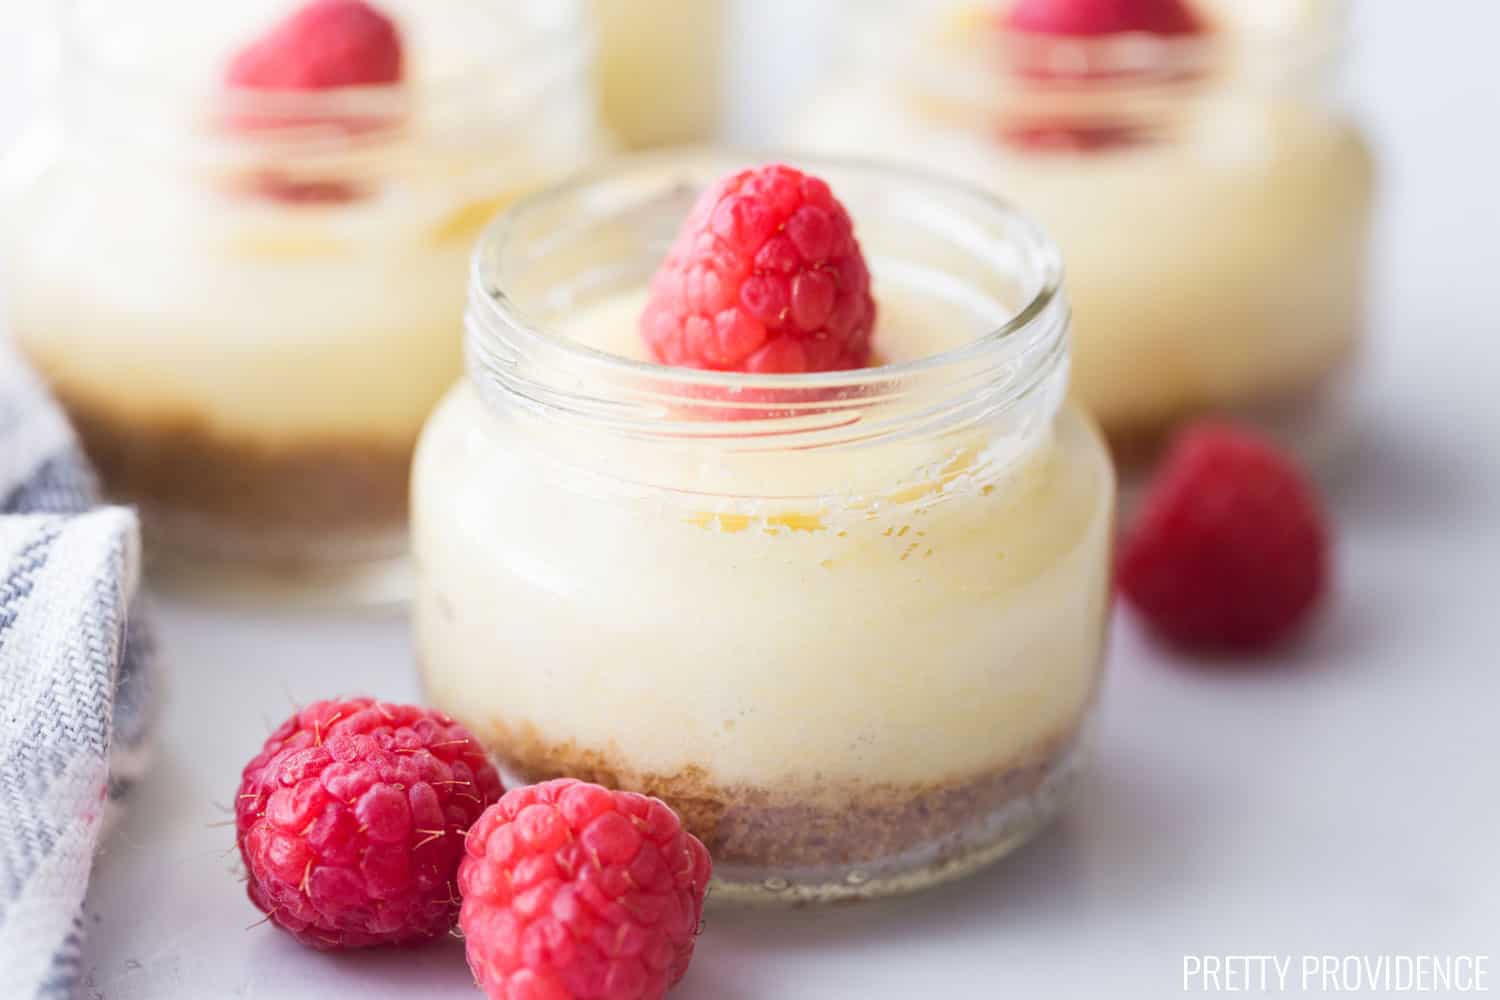 Mini Cheesecakes in jars with raspberries on top.